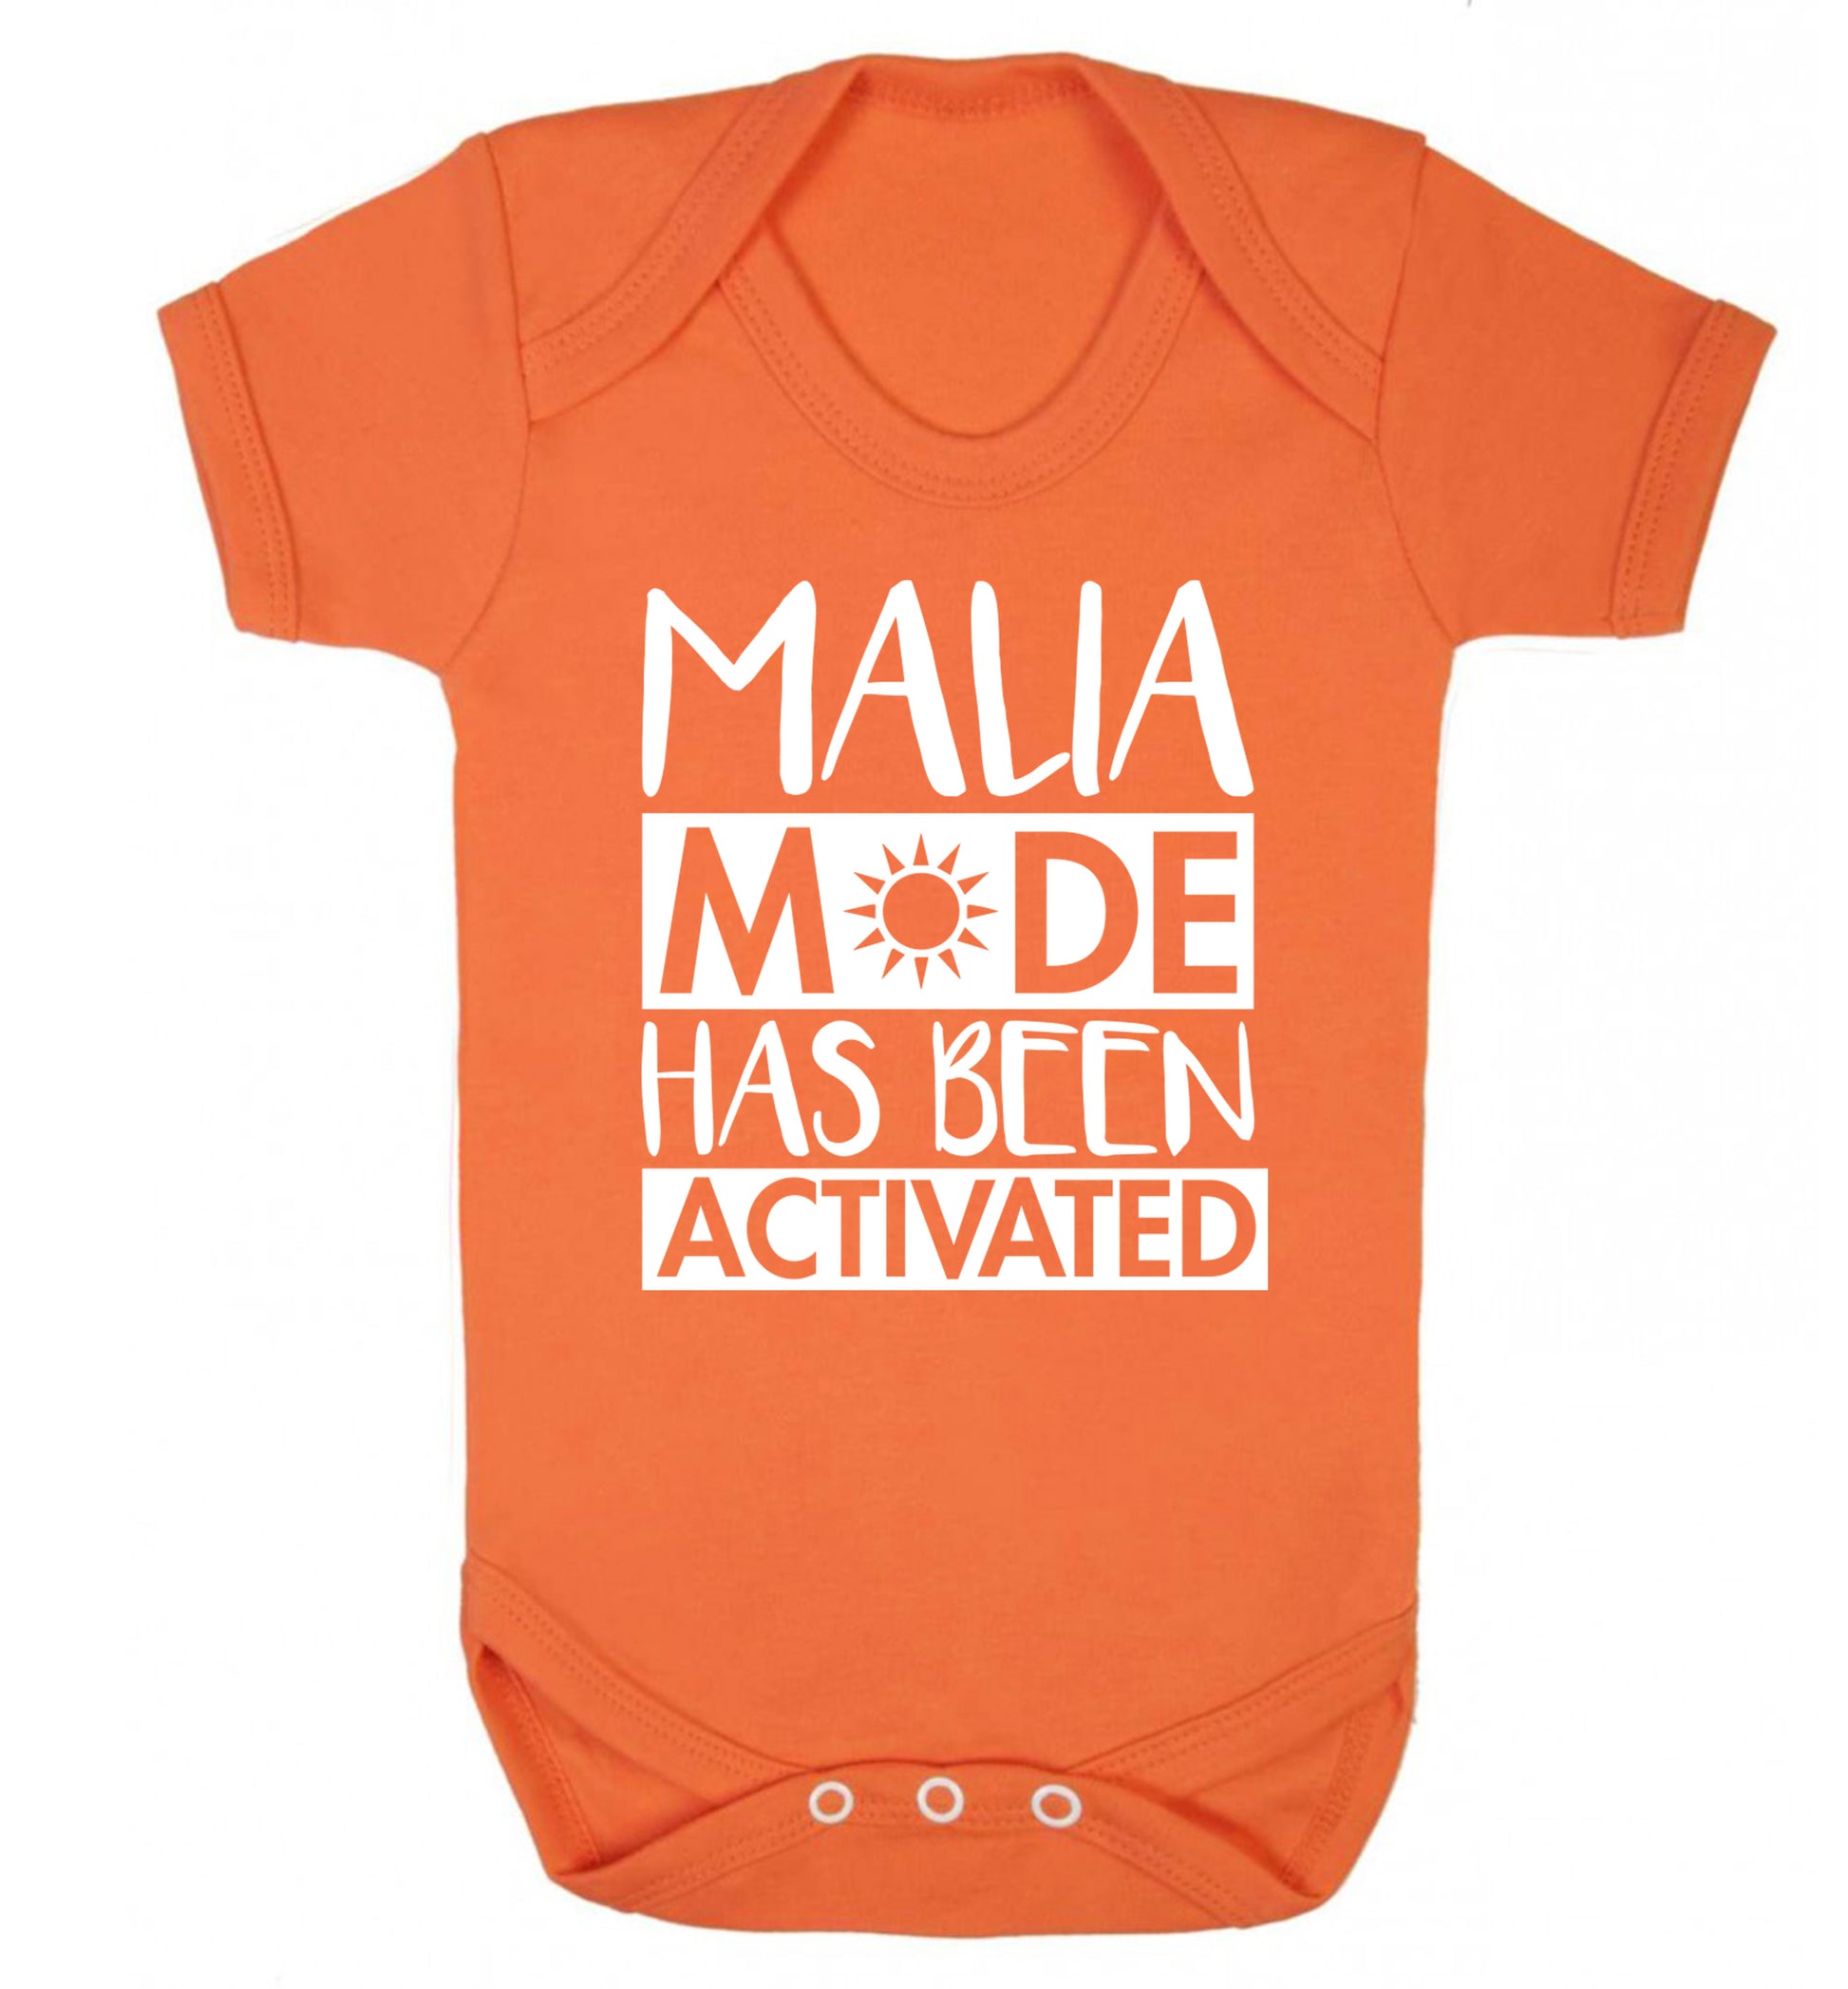 Malia mode has been activated Baby Vest orange 18-24 months